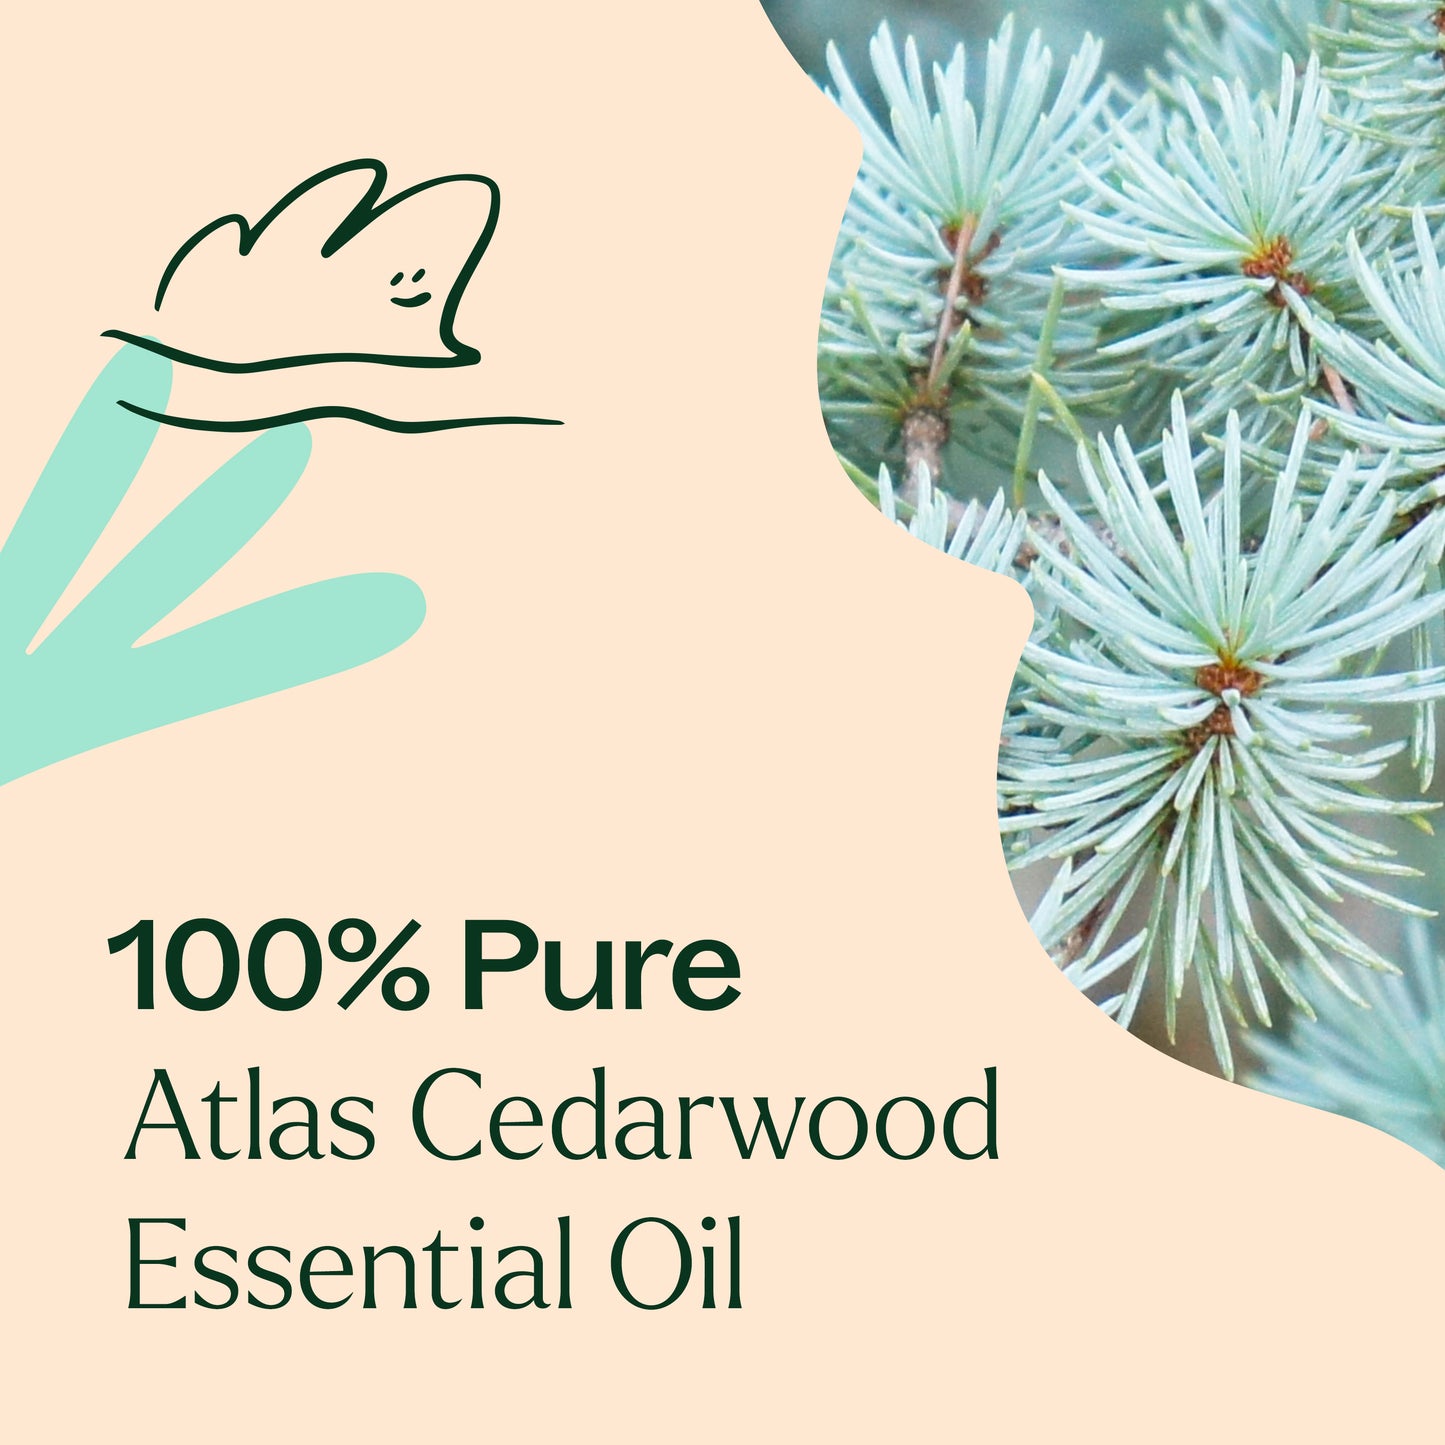 Organic Atlas Cedarwood Essential Oil